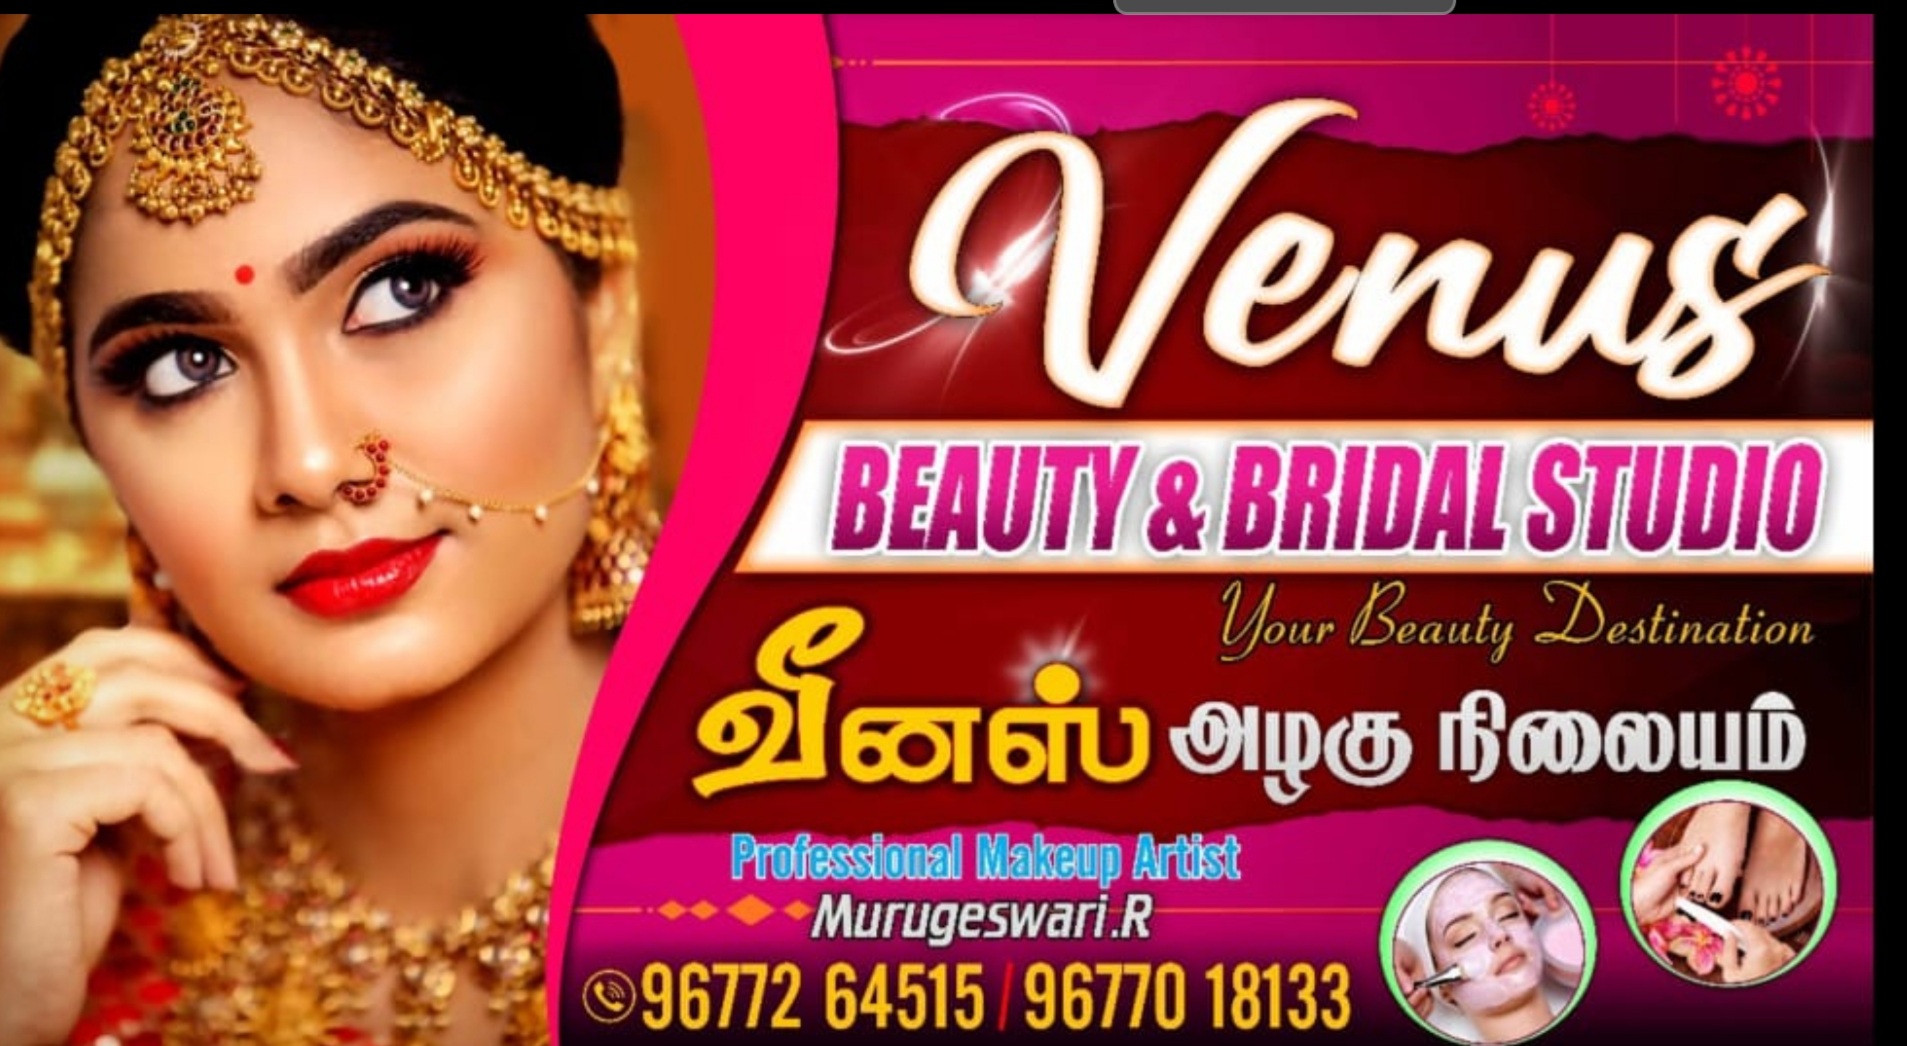 Venus Beauty parlour & Bridal Studio